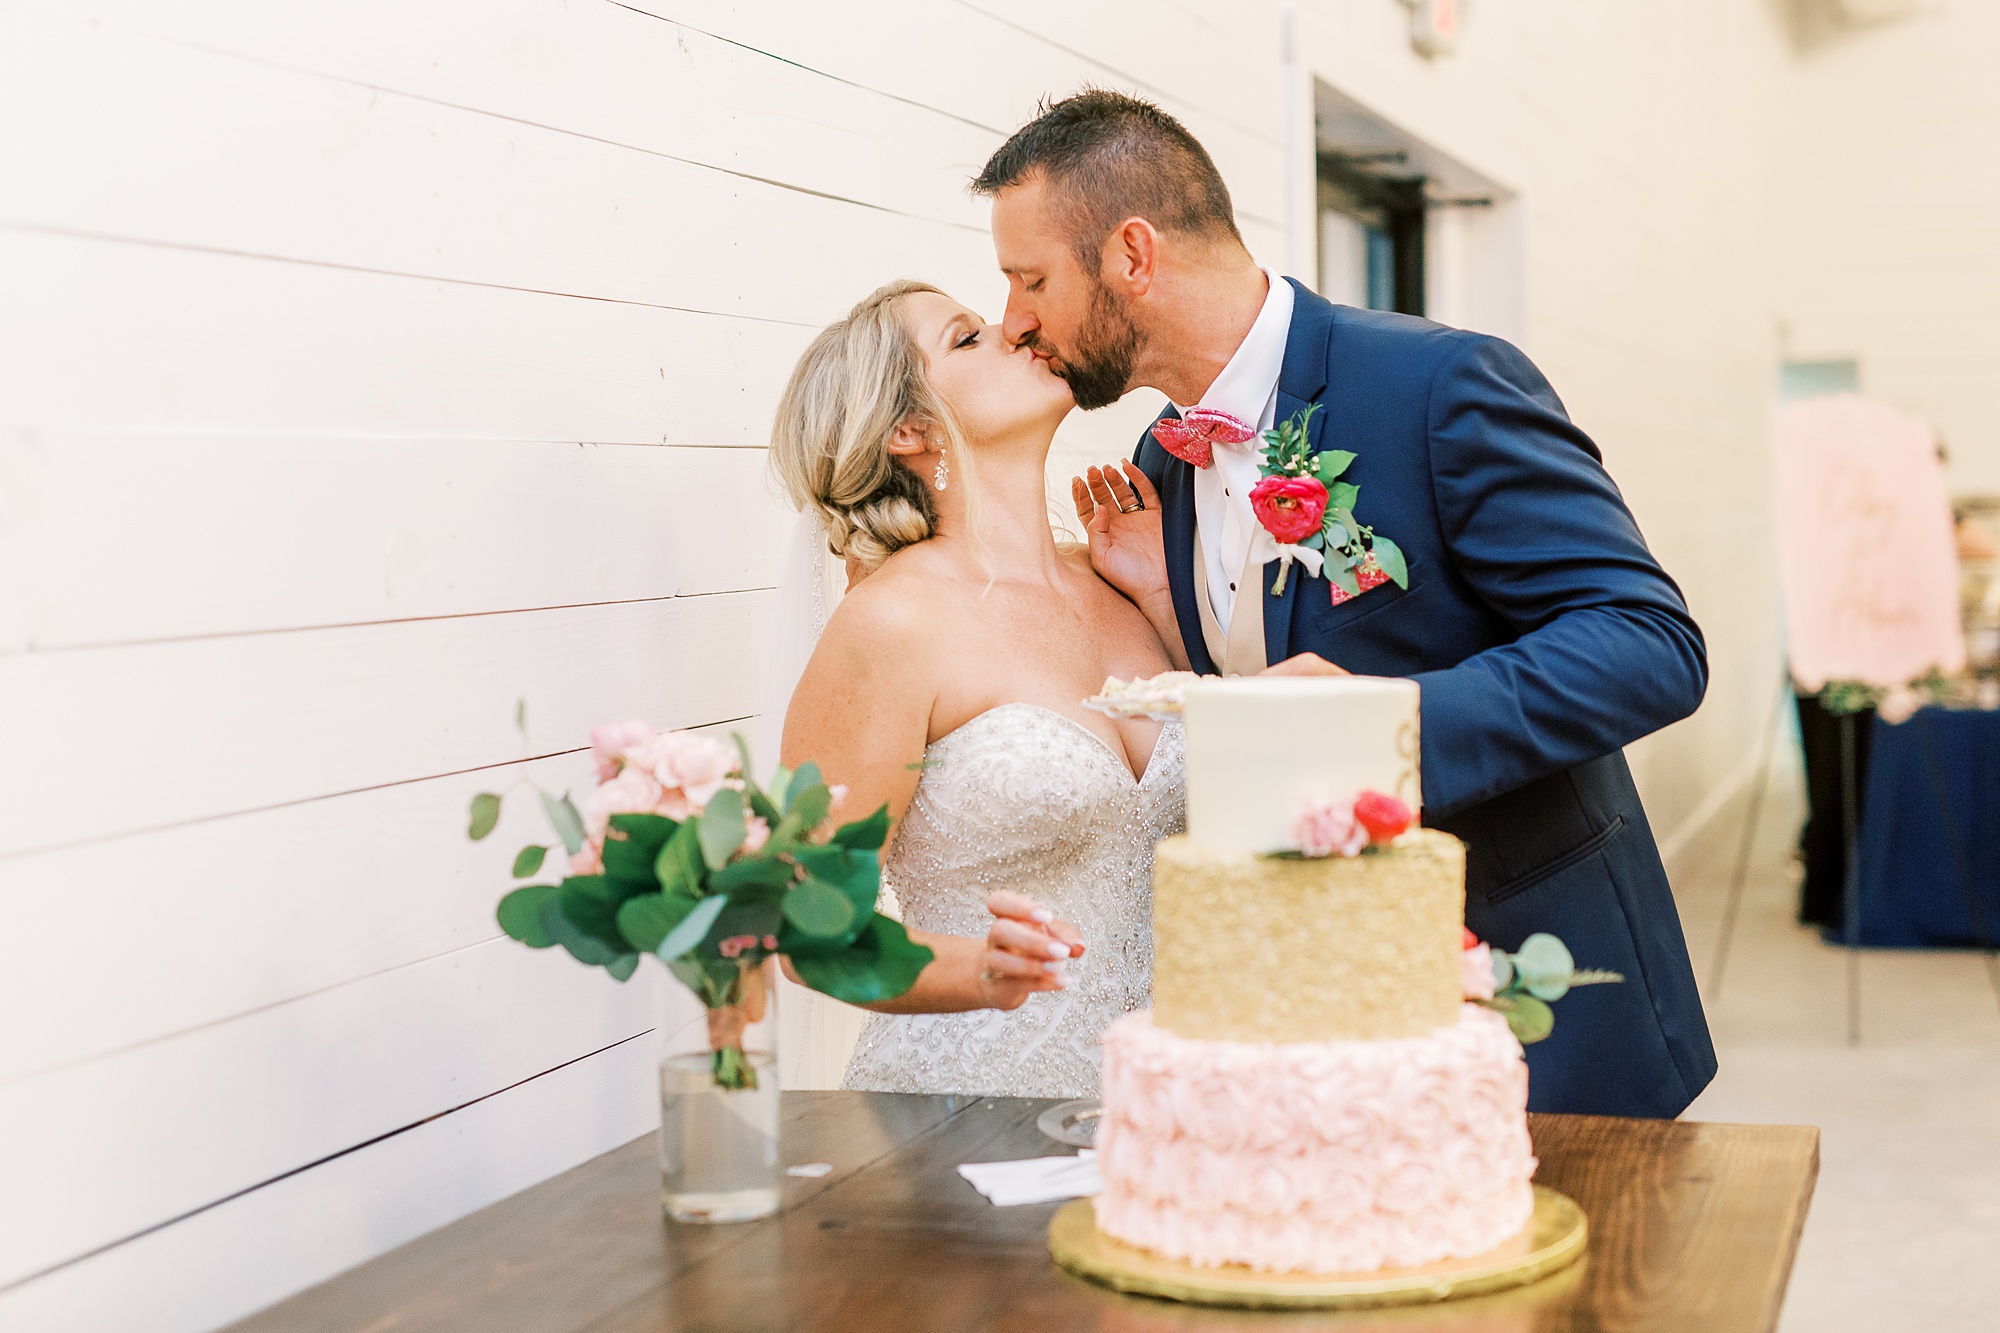 newlyweds kiss after cutting wedding cake